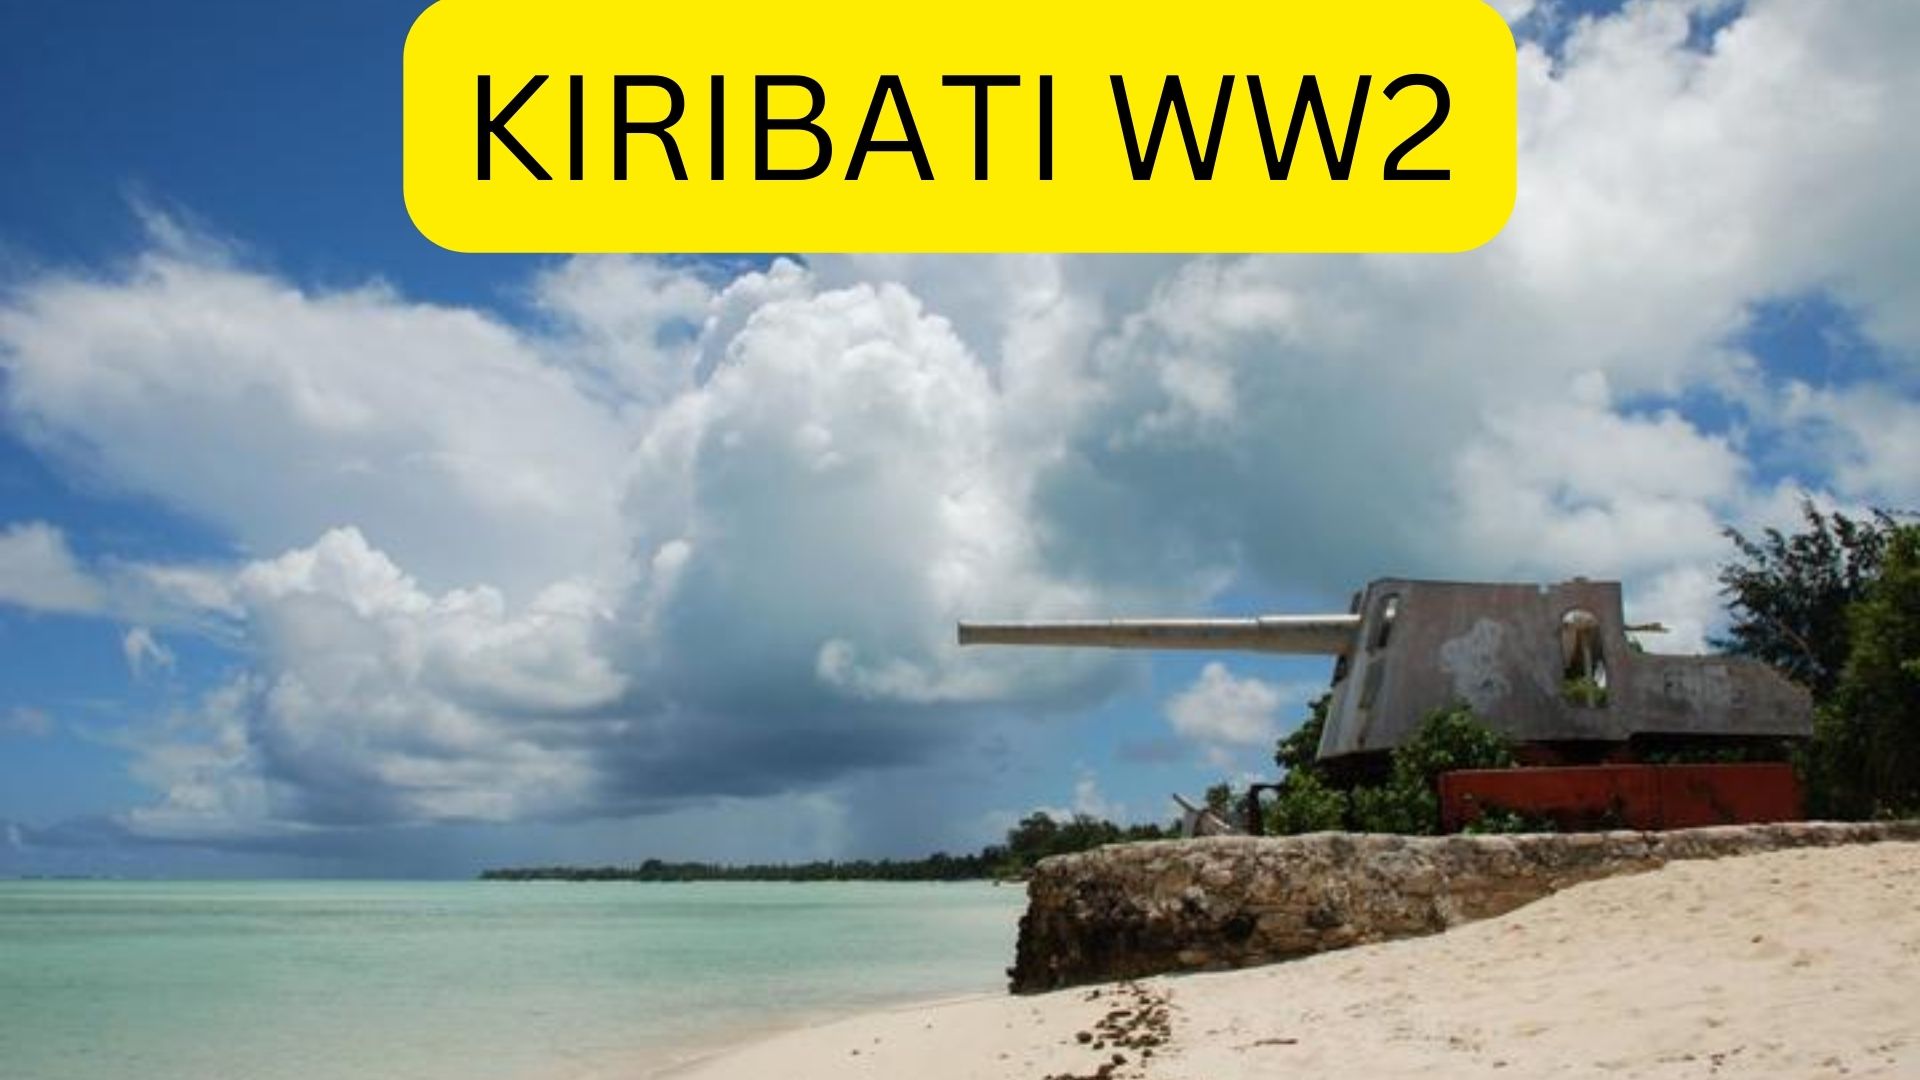 Kiribati Ww2 - Island Country In The Central Pacific Ocean